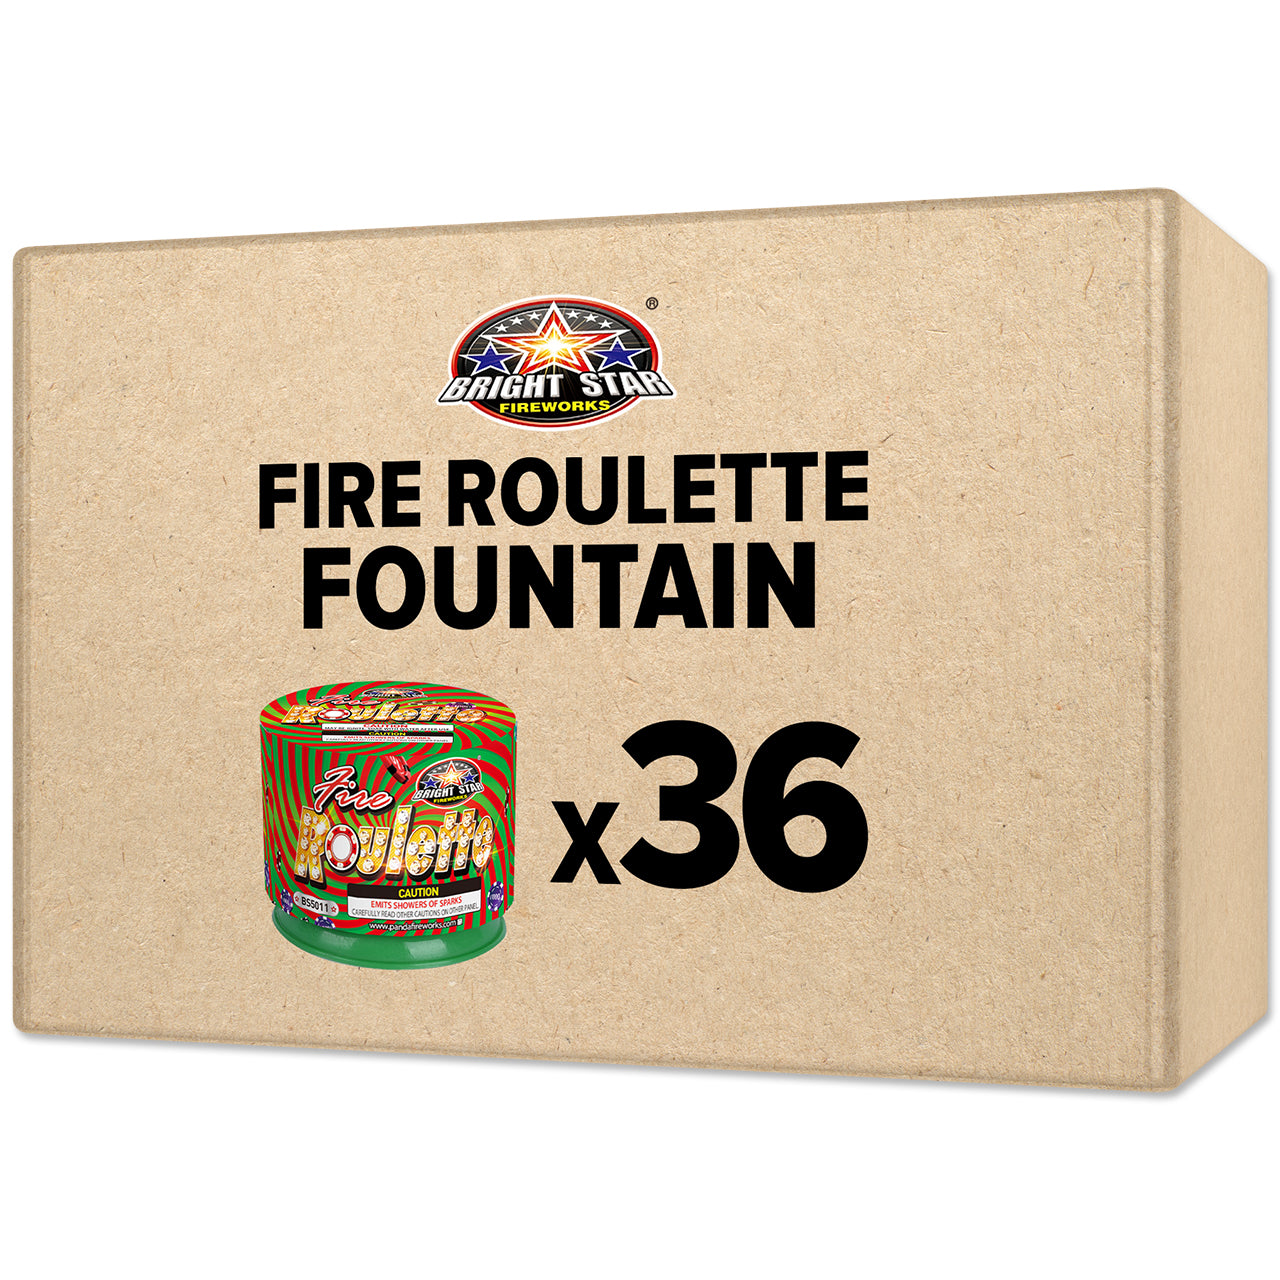 Fire Roulette Fountain